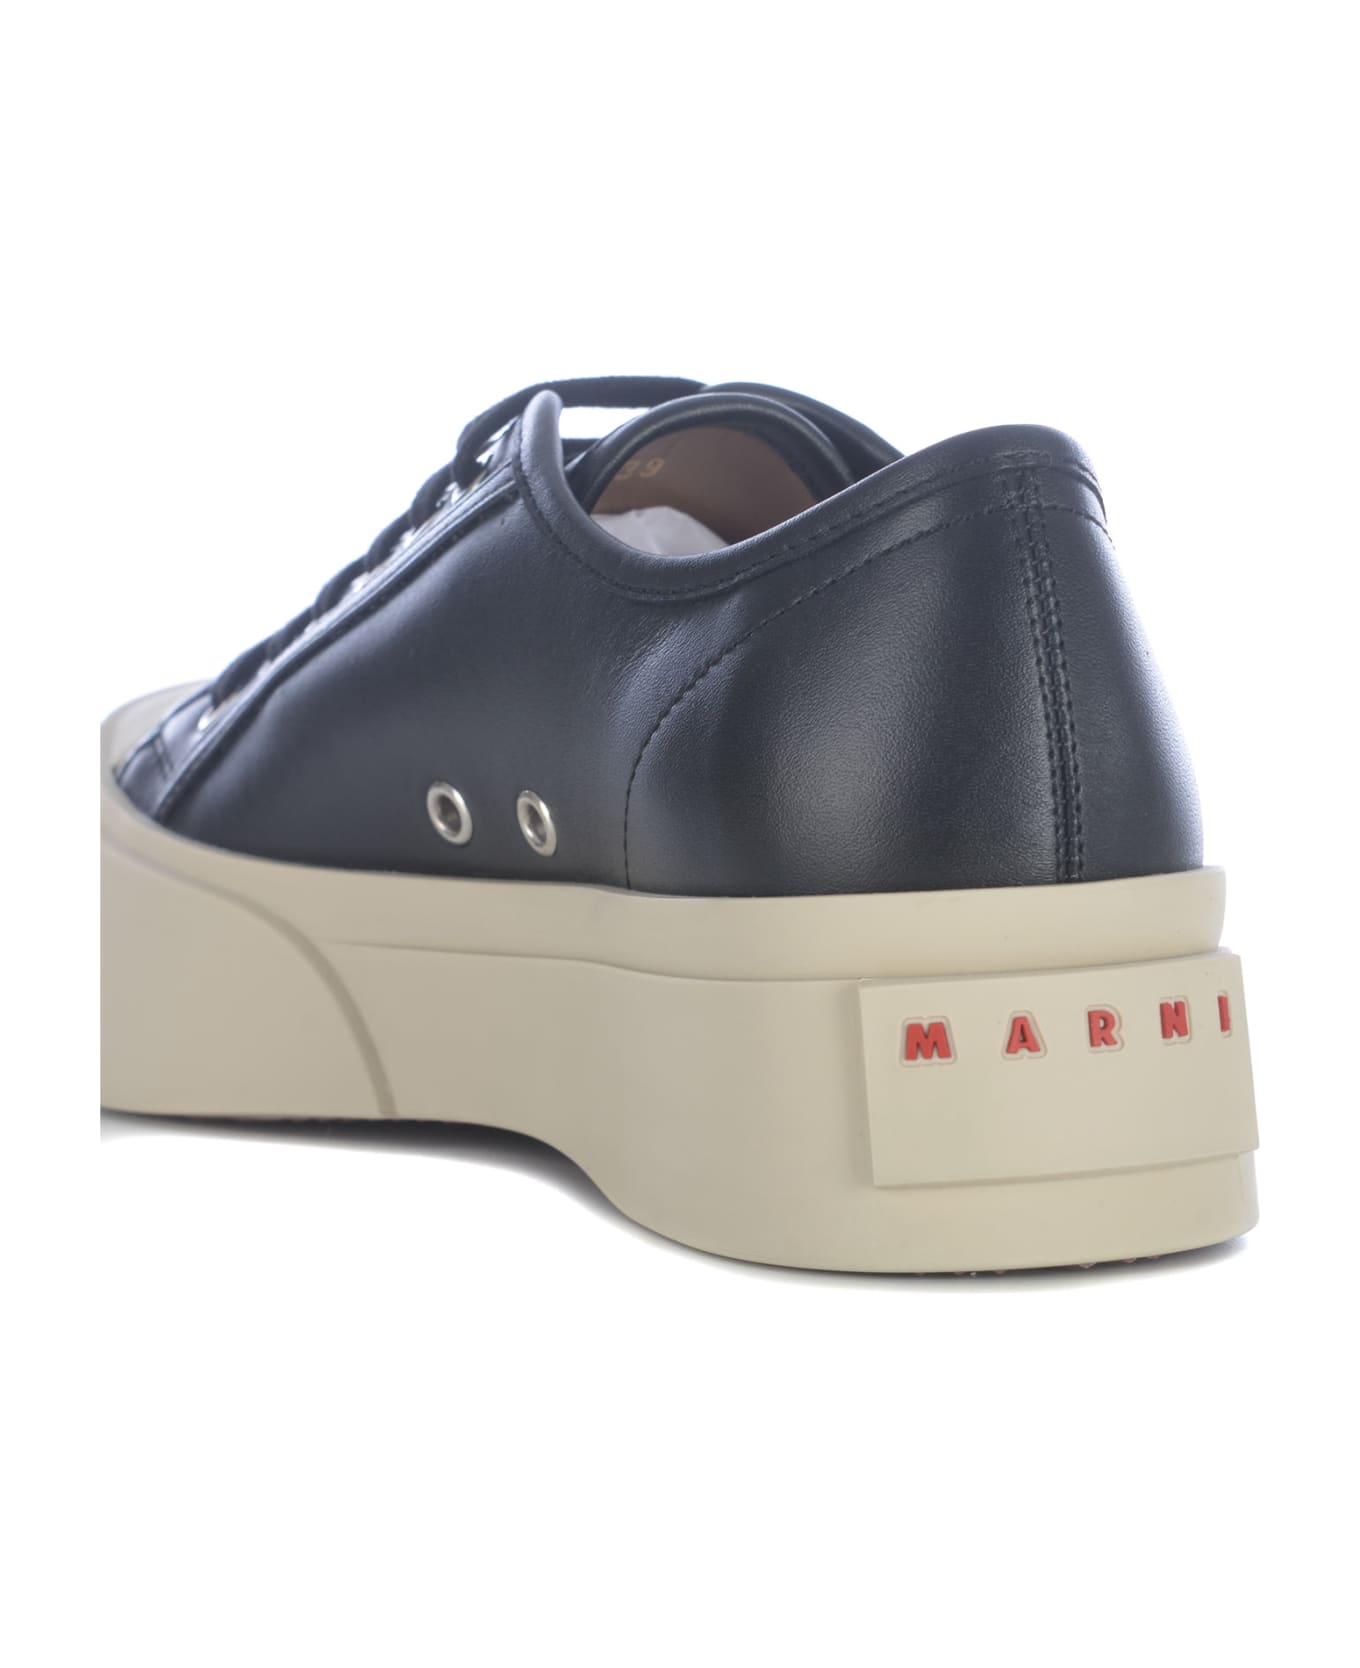 Marni Sneakers Marni "pablo" Made Of Nappa - Nero